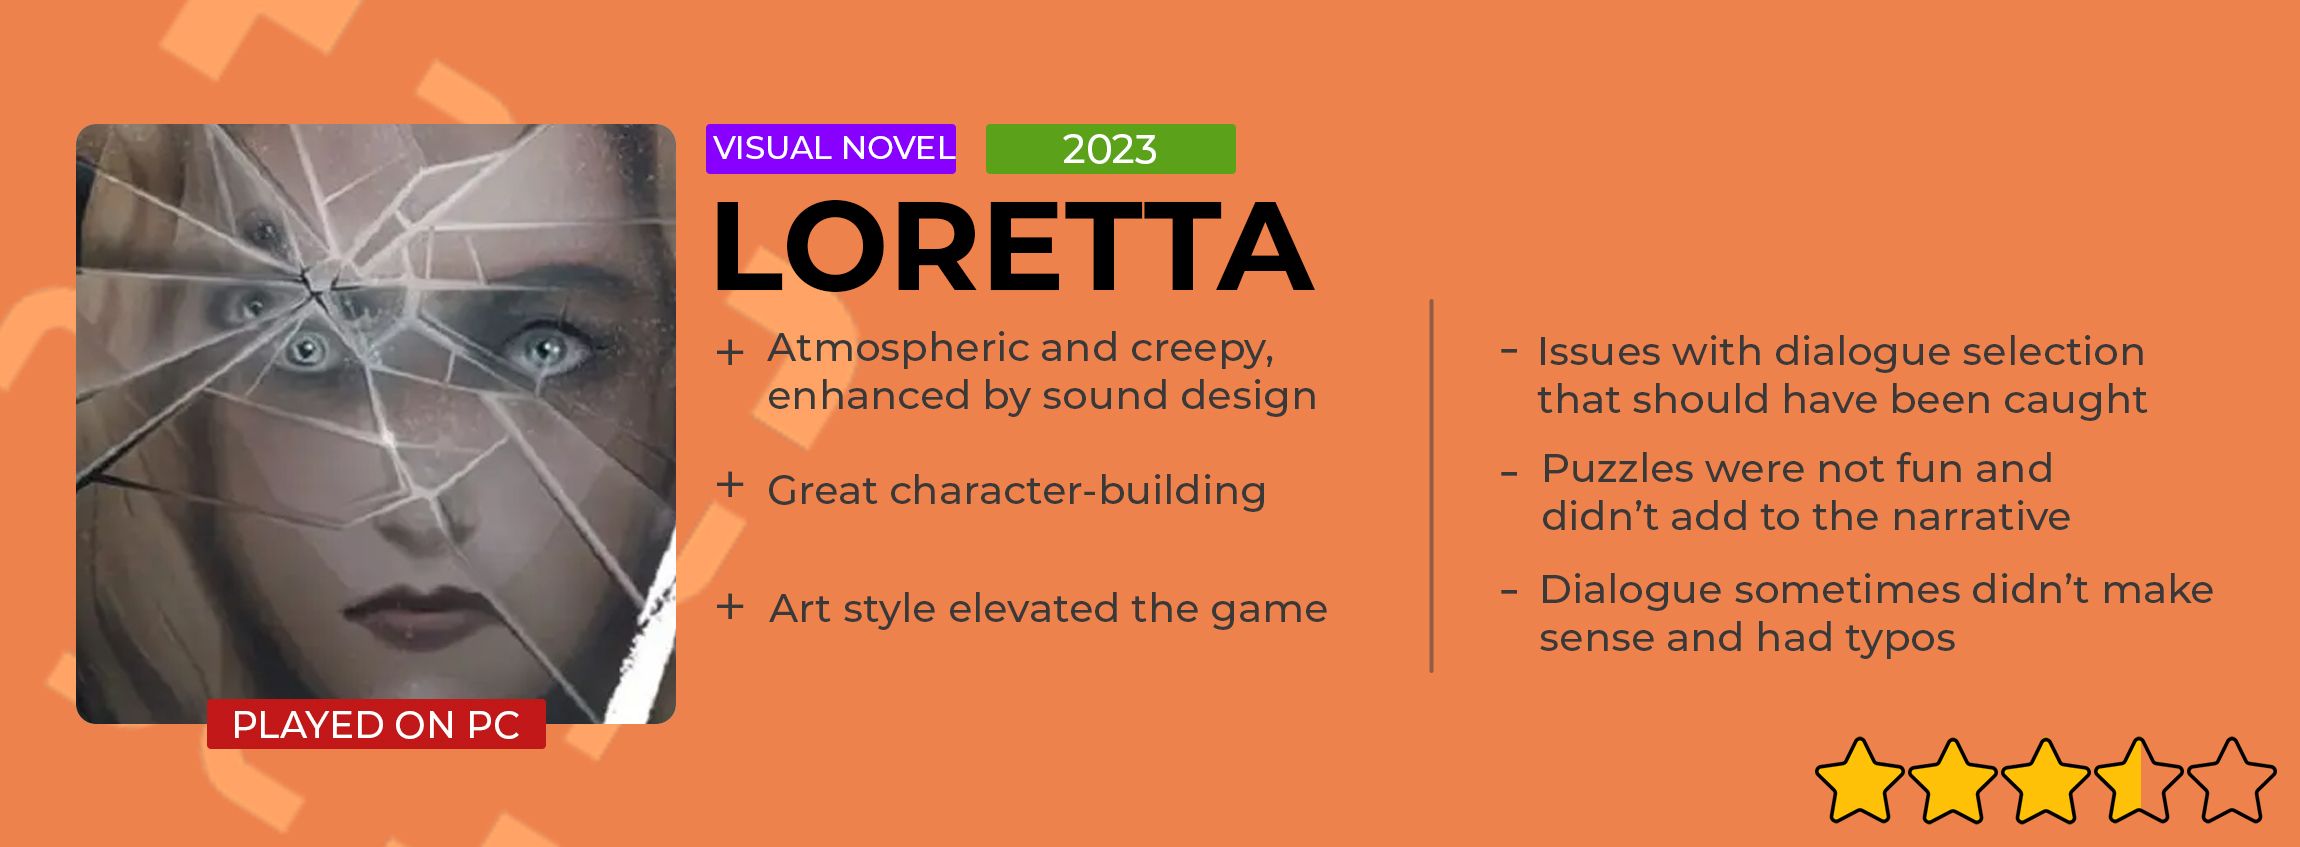 Loretta review card-1